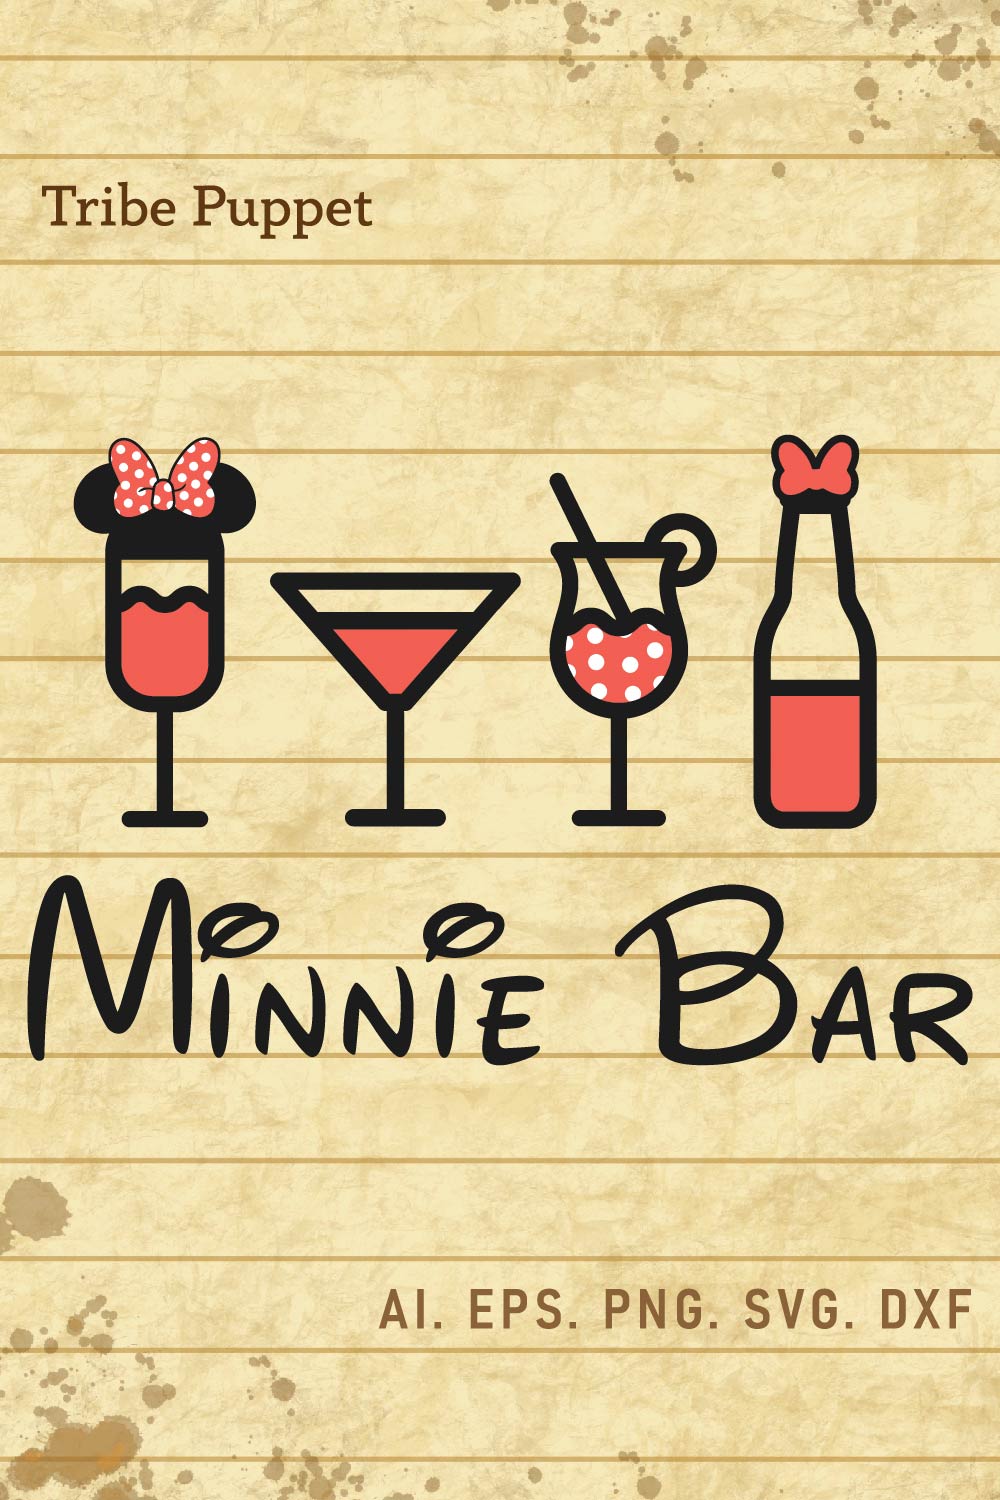 Minnie Bar pinterest preview image.